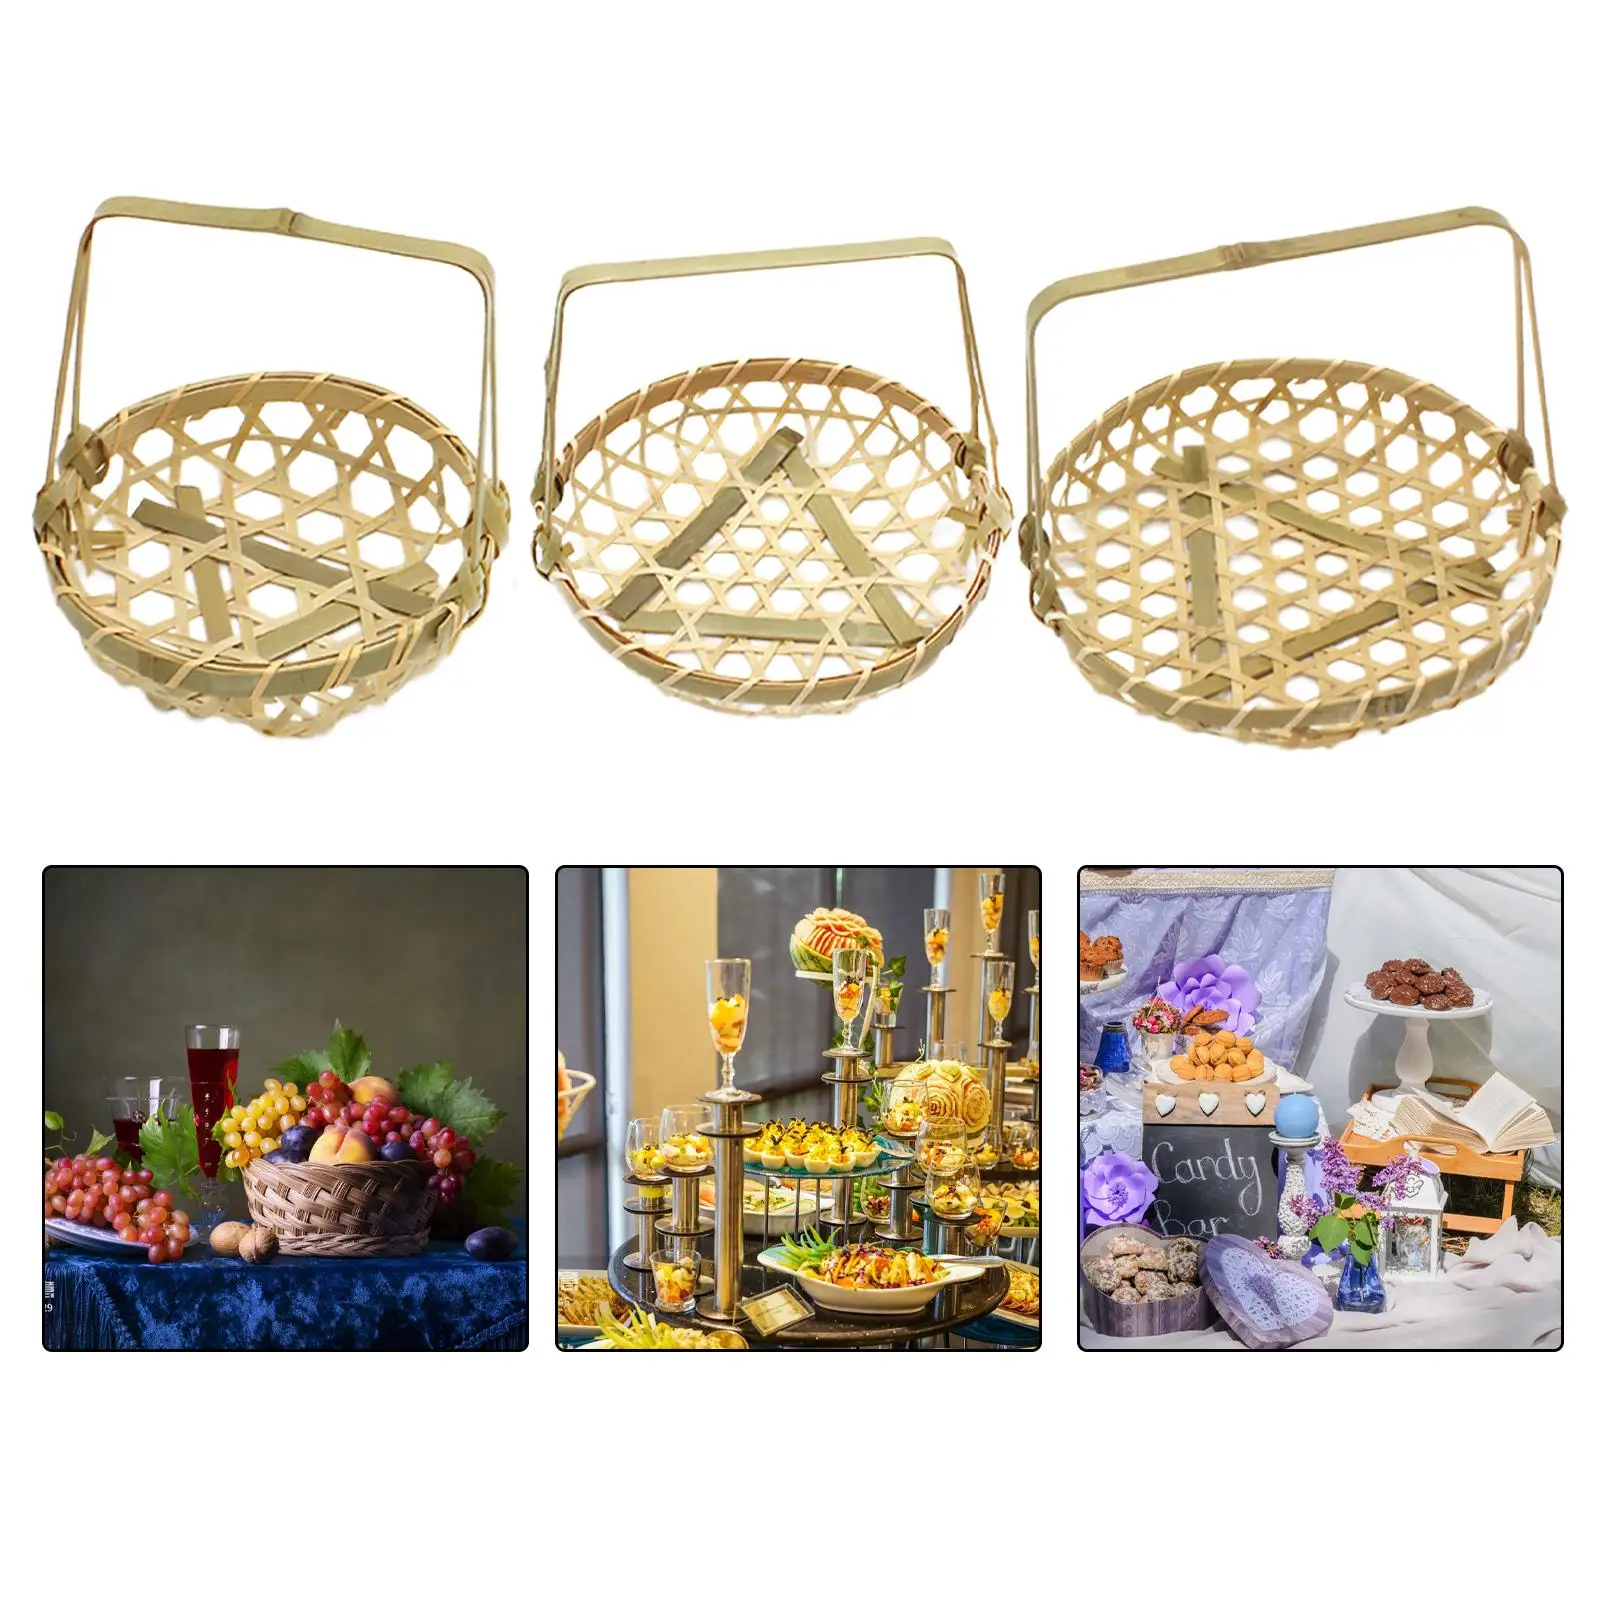 Bamboo Basket Elegant Flower Arrangement Shopping Basket Flower Basket Woven Basket for Living Room Party Banquet Bedroom Picnic